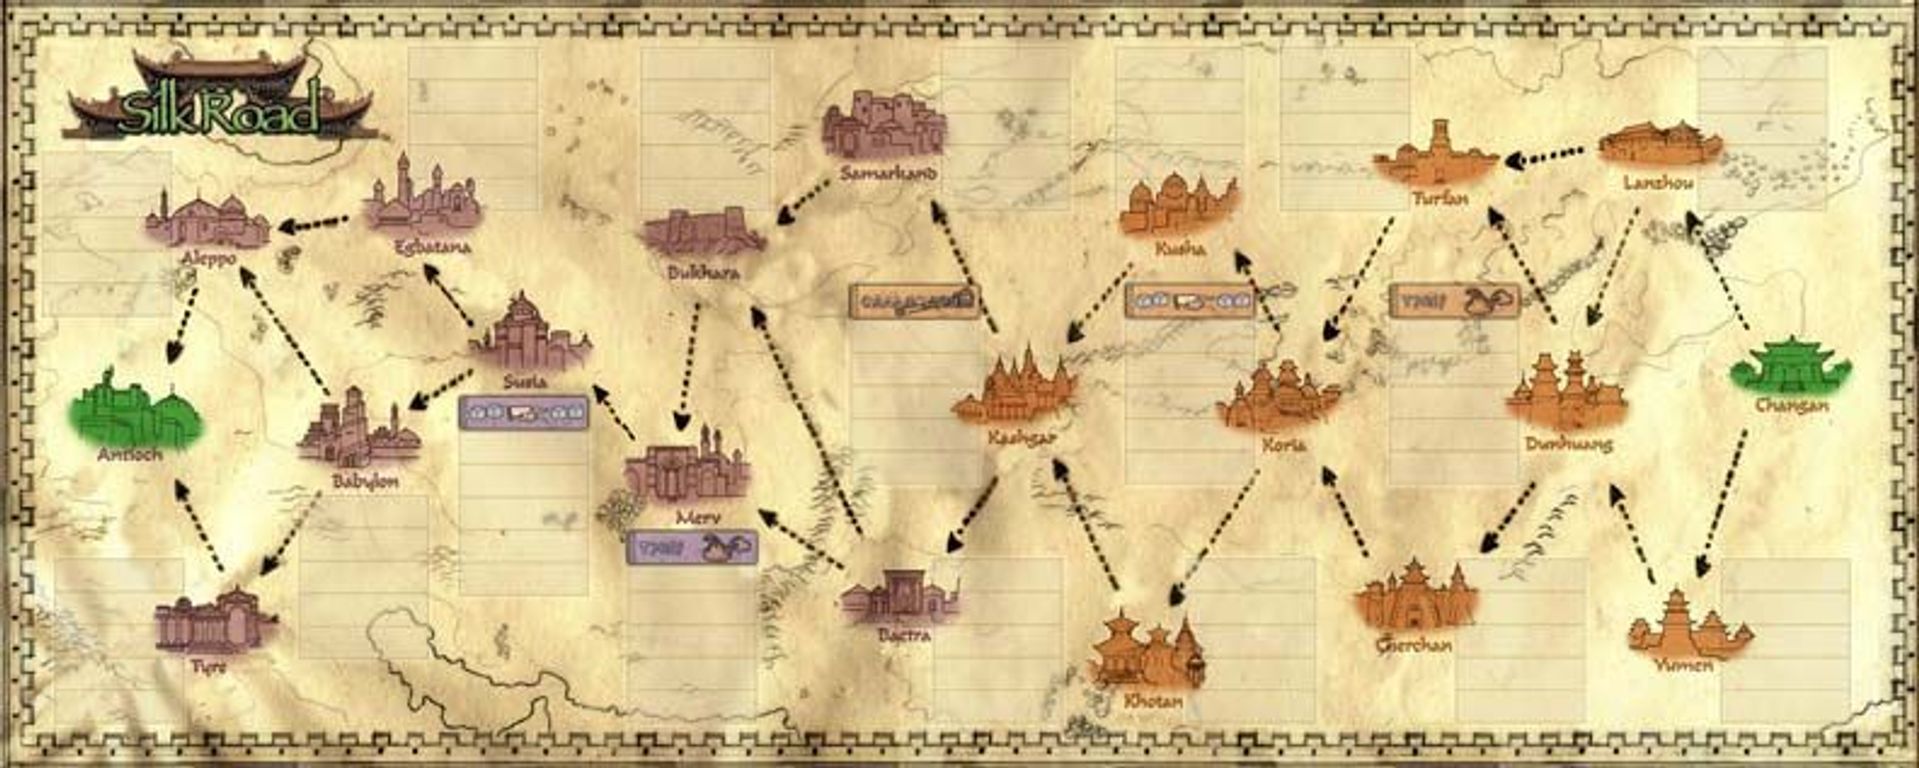 Silk Road game board